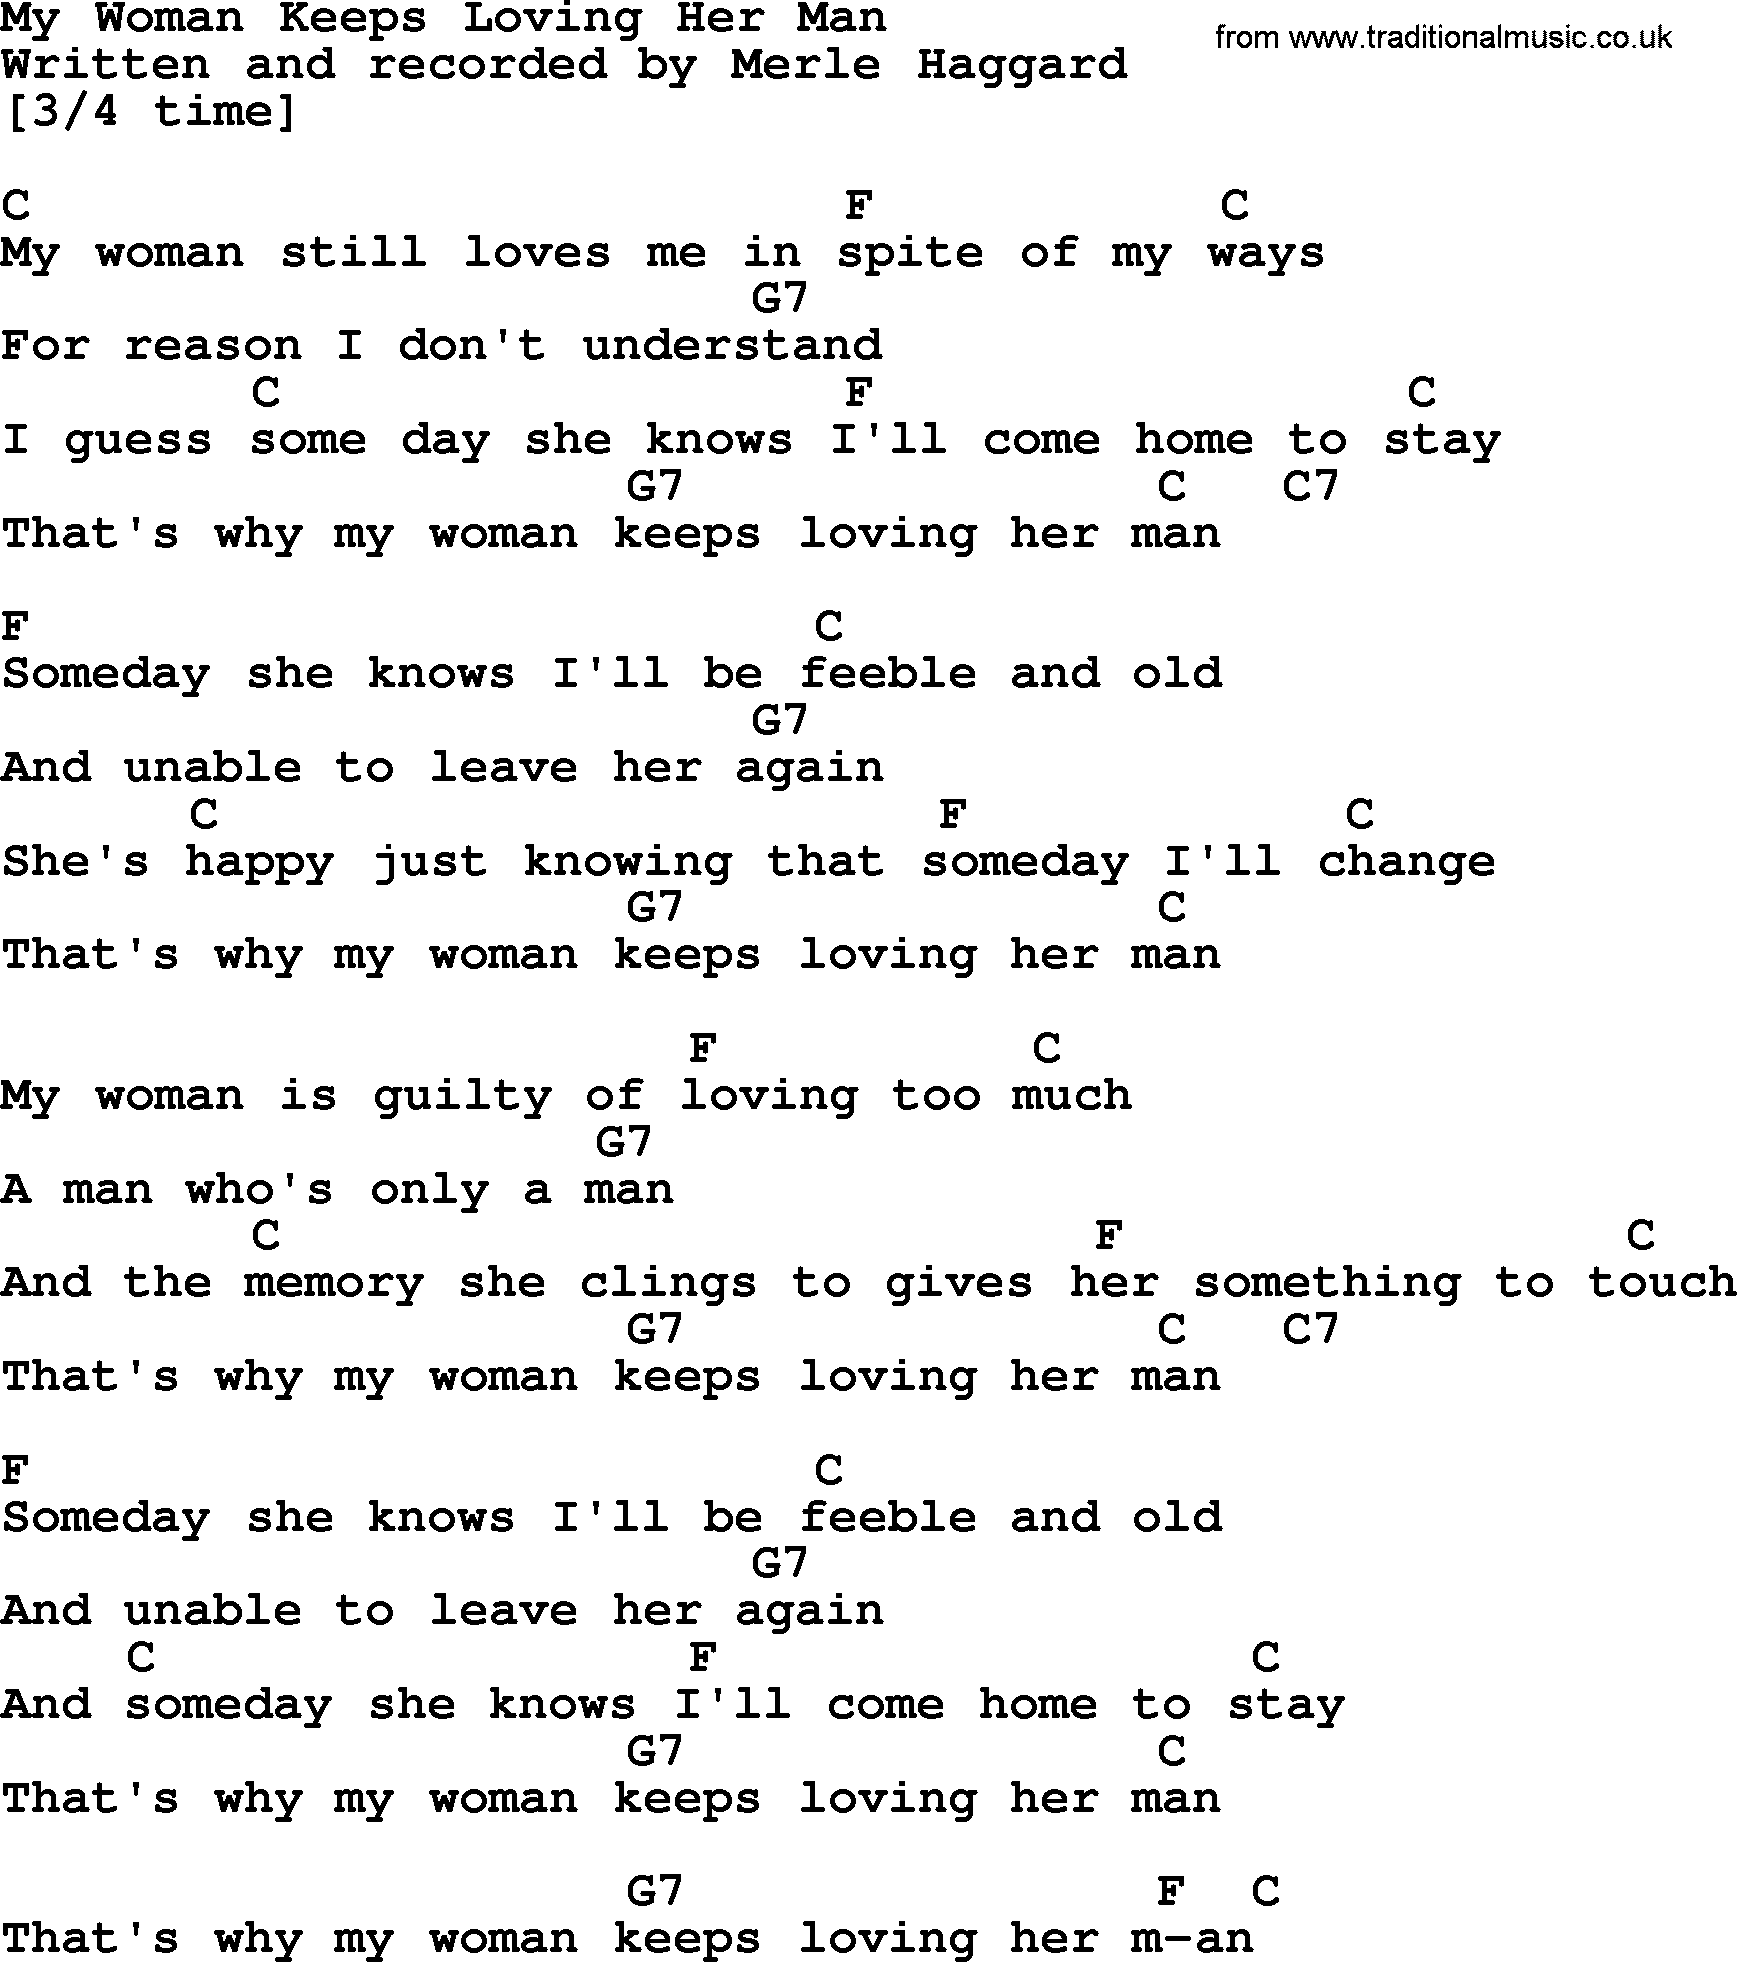 Merle Haggard song: My Woman Keeps Loving Her Man, lyrics and chords